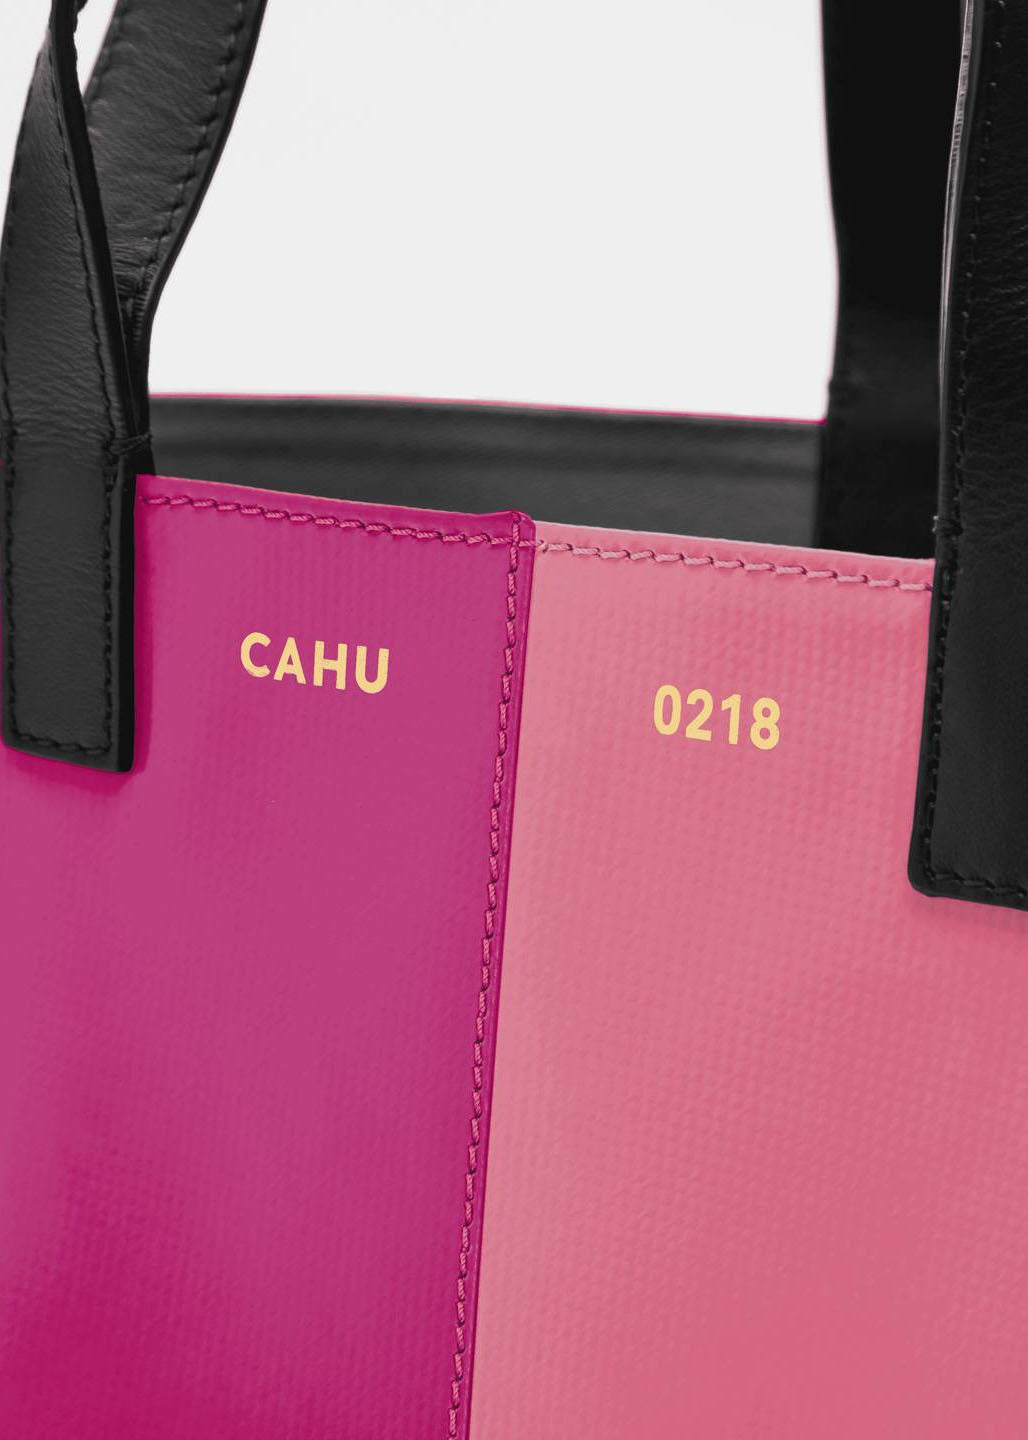 CAHU Small Tote Bag — Pink